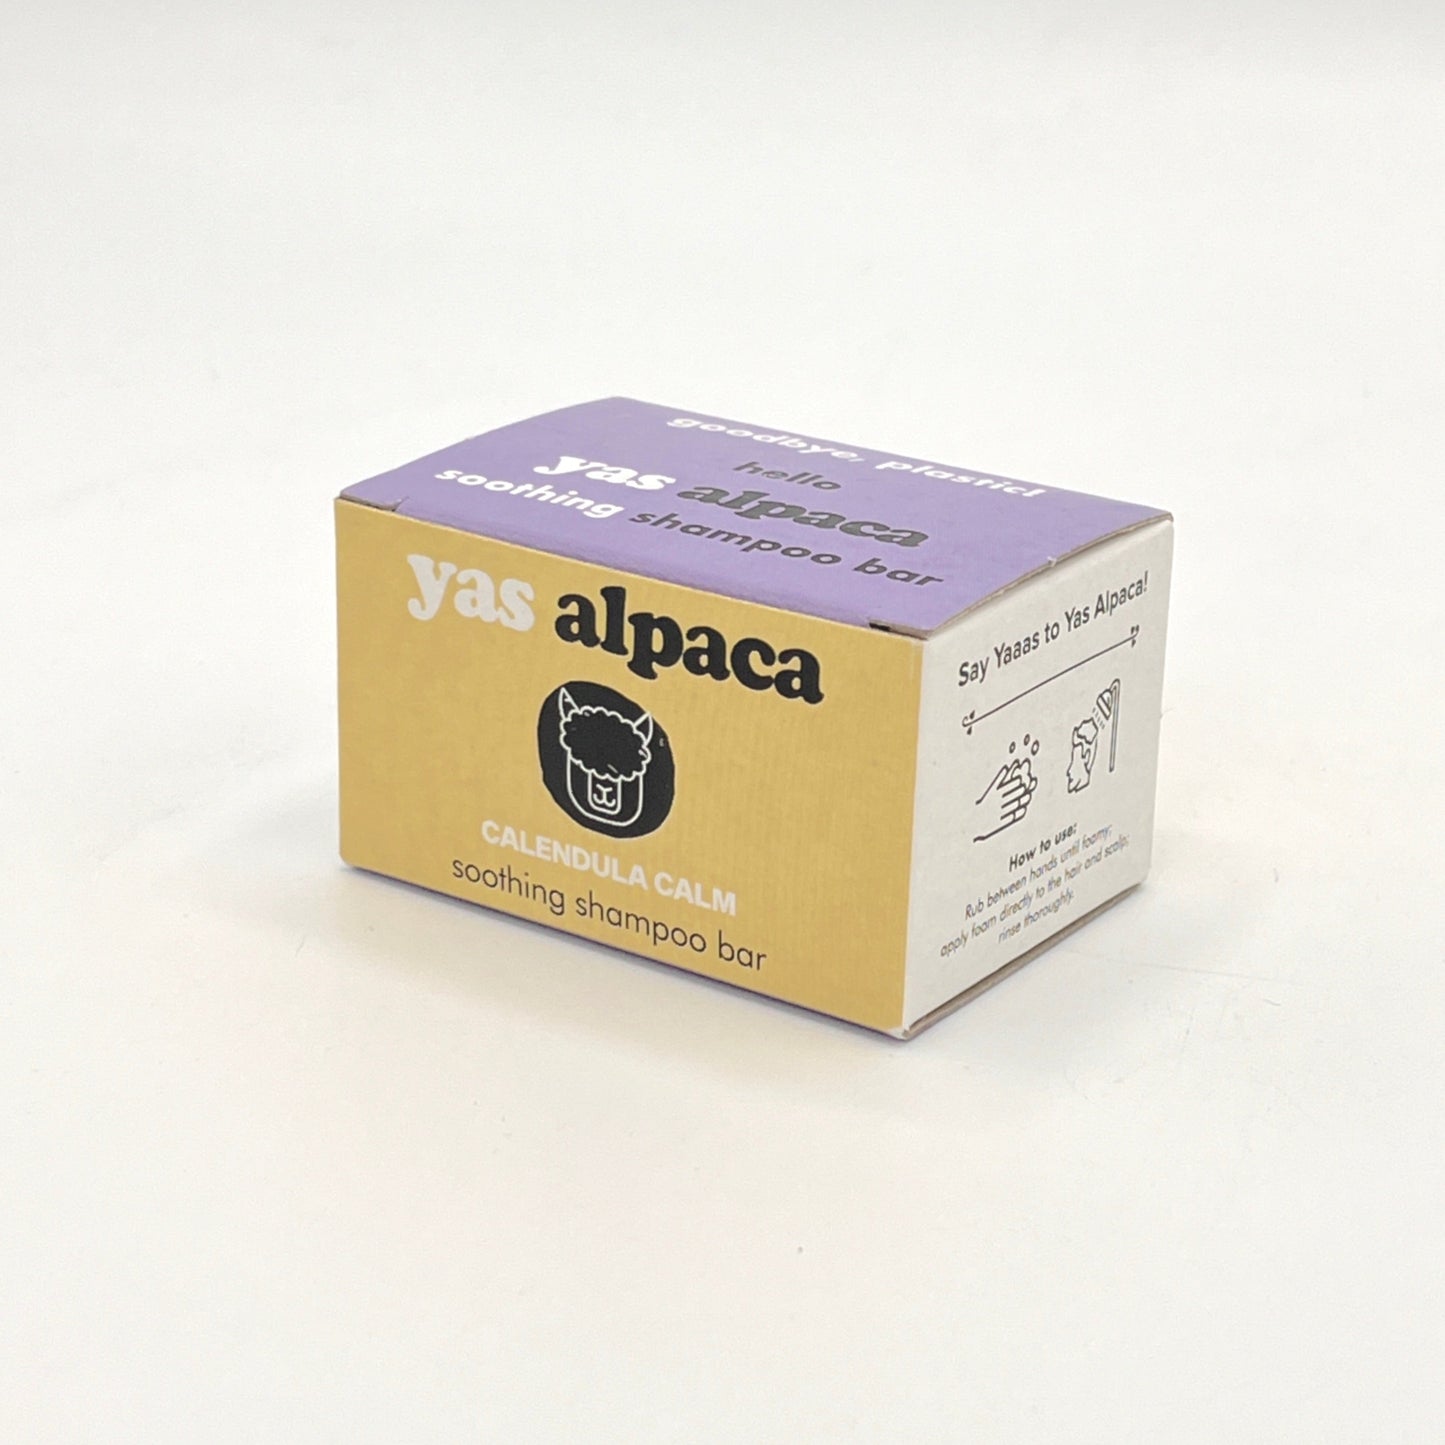 Shampoo from Yas Alpaca - Calendula Calm